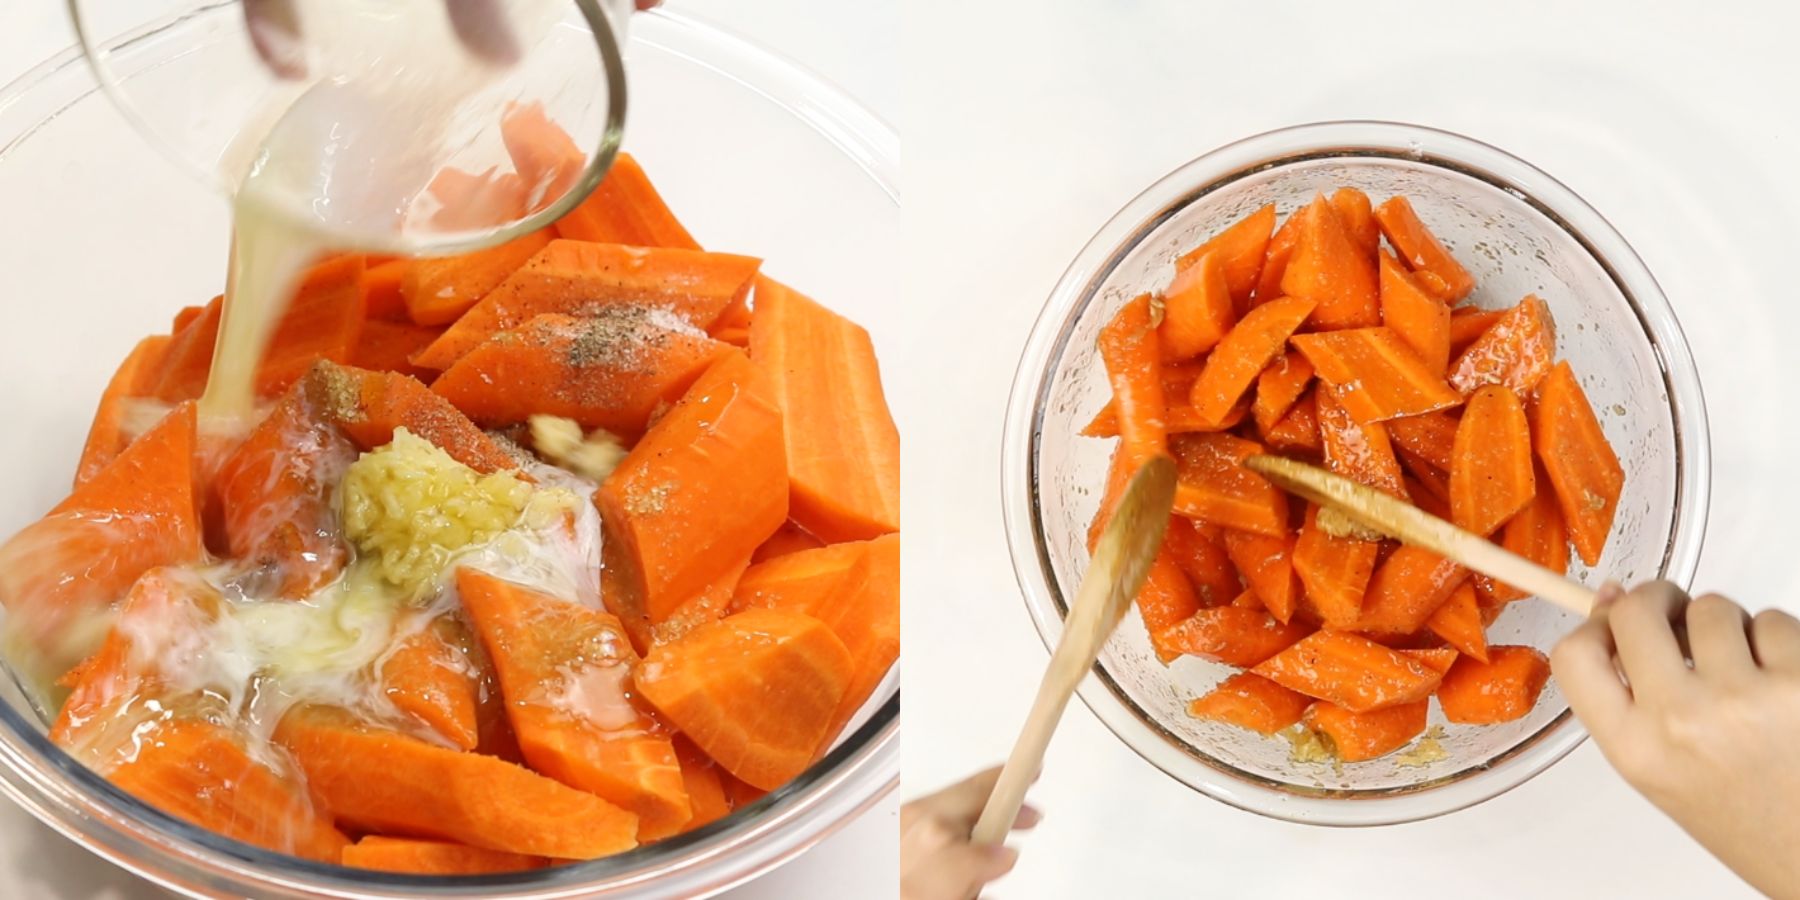 Roasted carrot process shots.